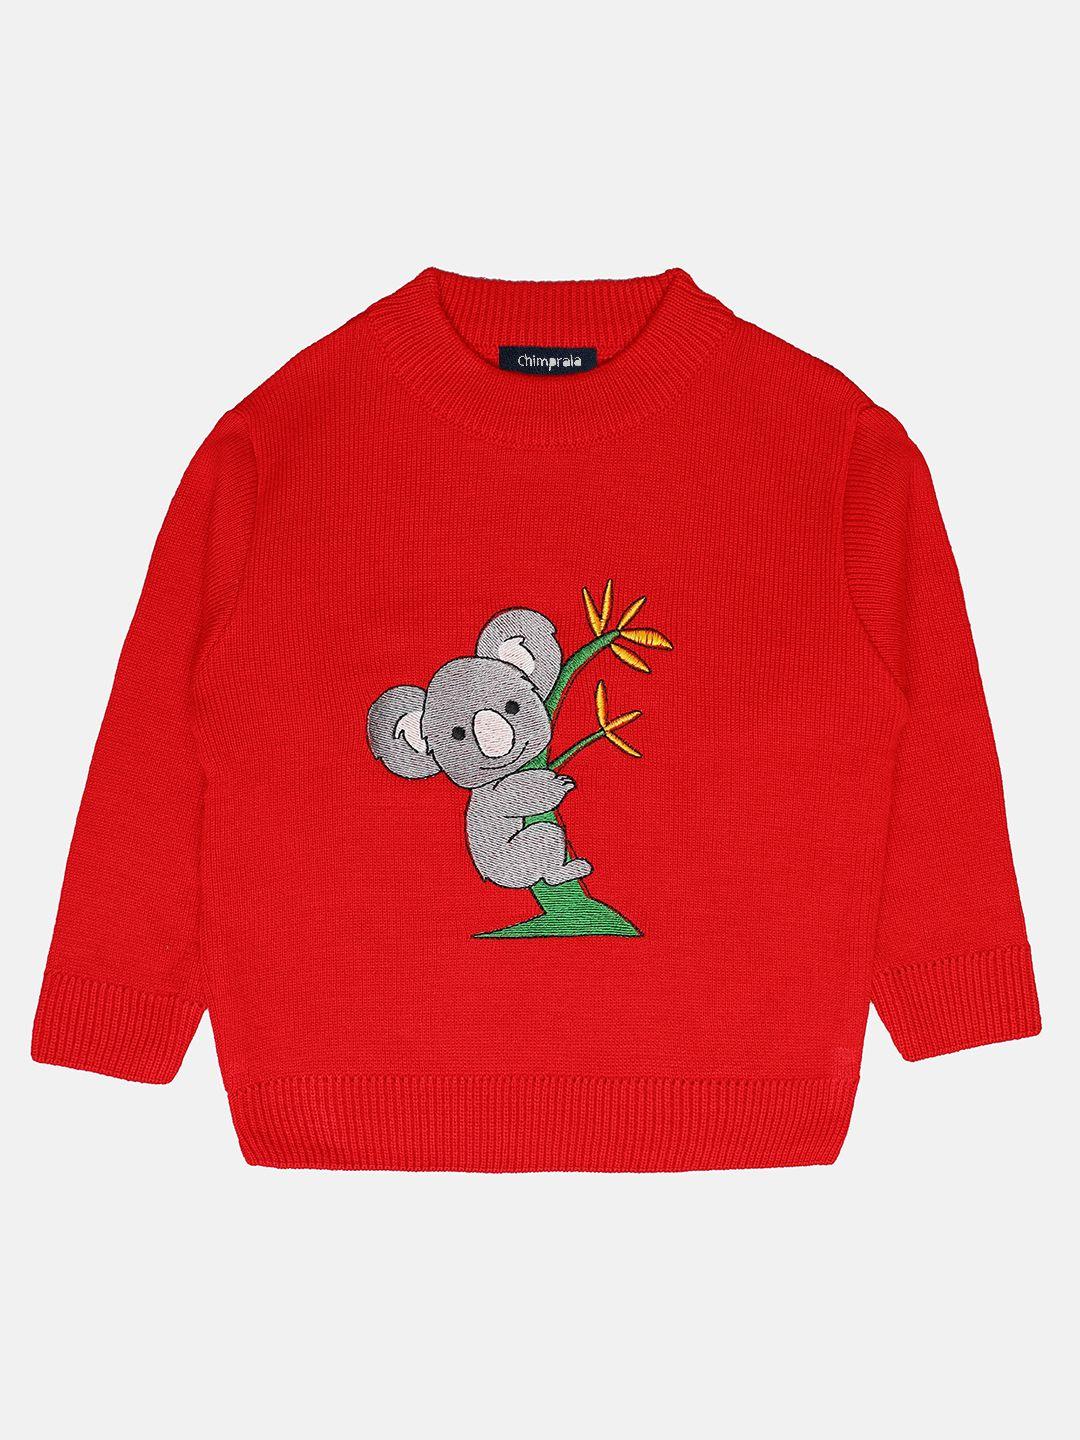 chimprala-boys-red-&-grey-printed-pullover